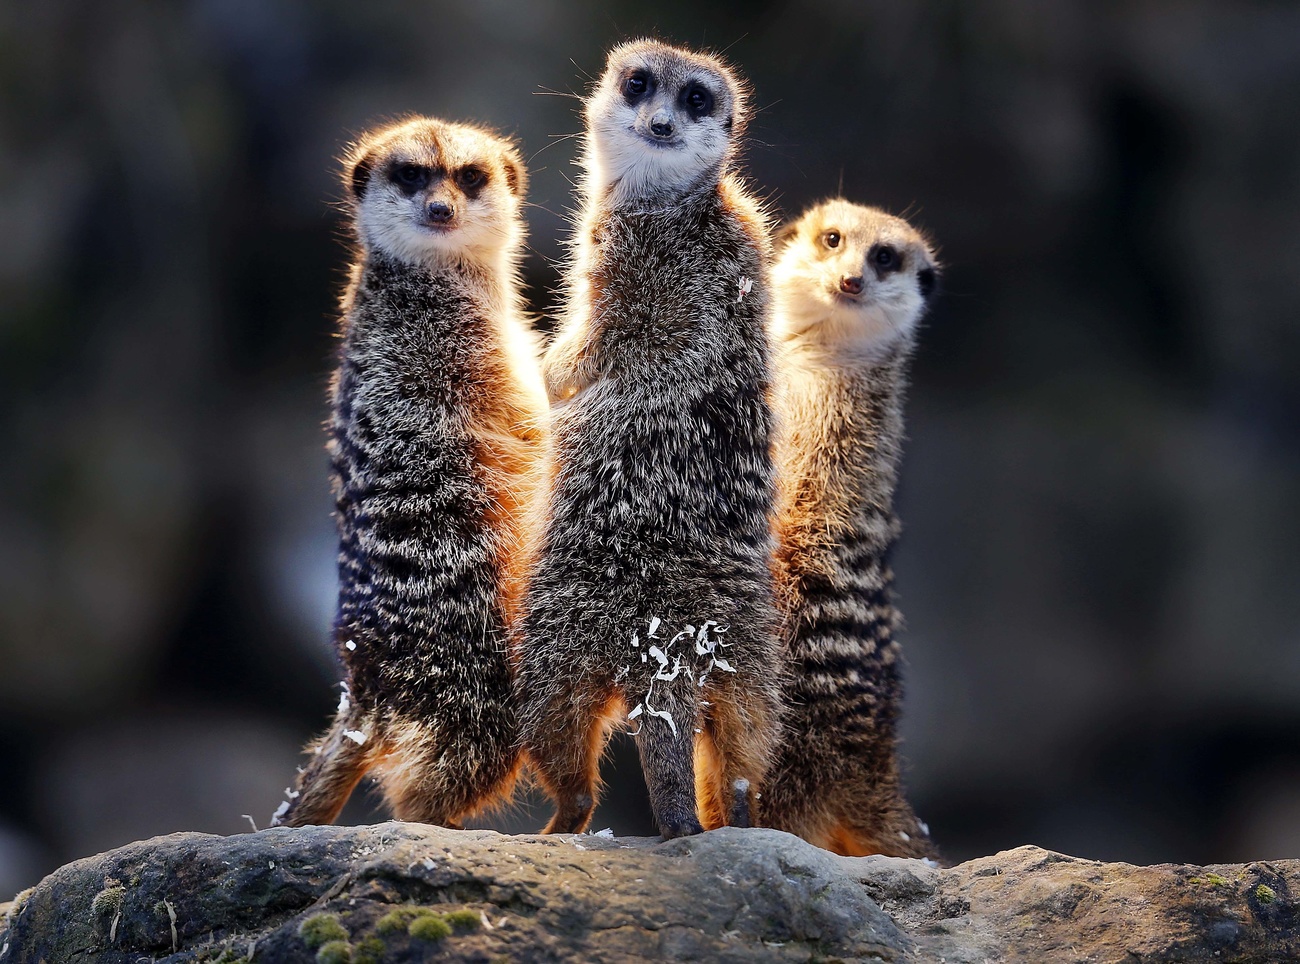 Three meerkats